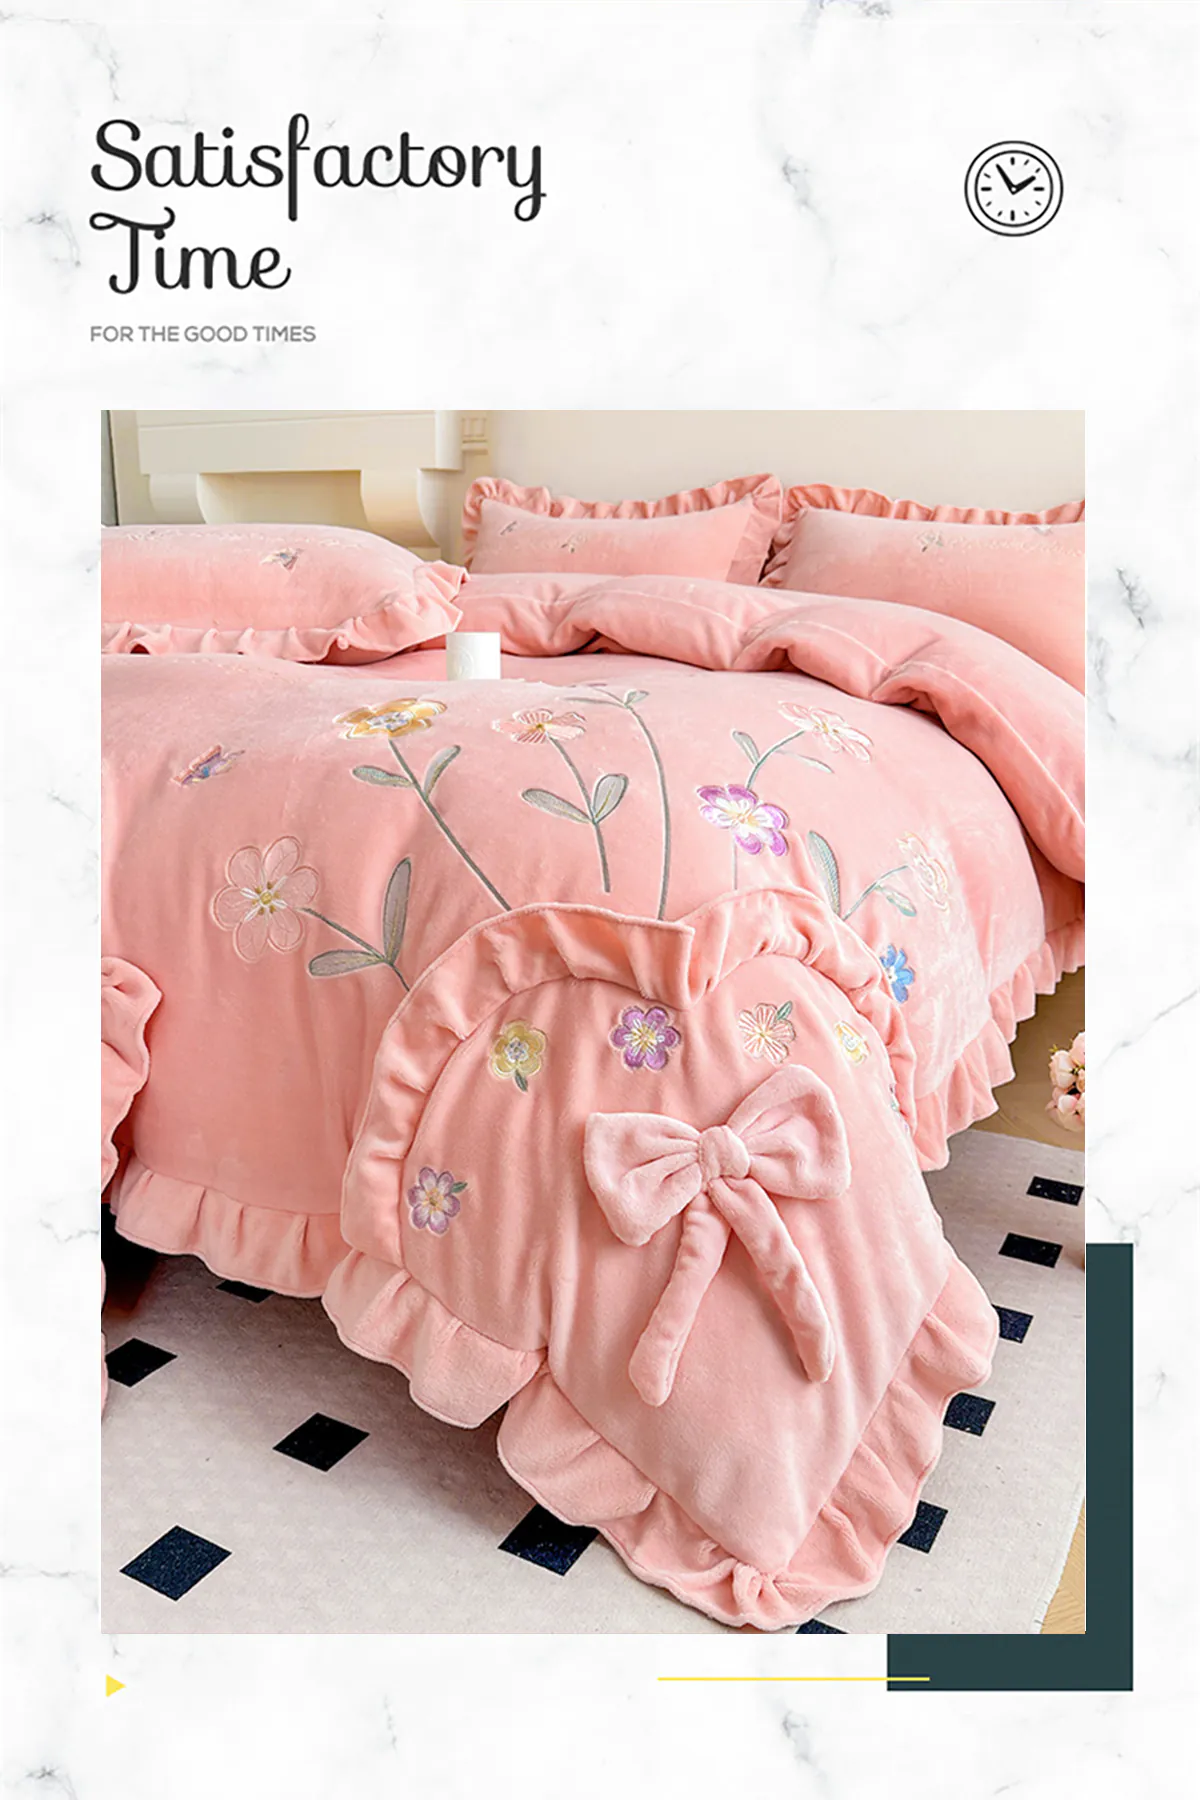 Romantic-Milk-Fiber-Comforter-Cover-Bed-Sheet-Pillowcases-4-Pcs-Set16